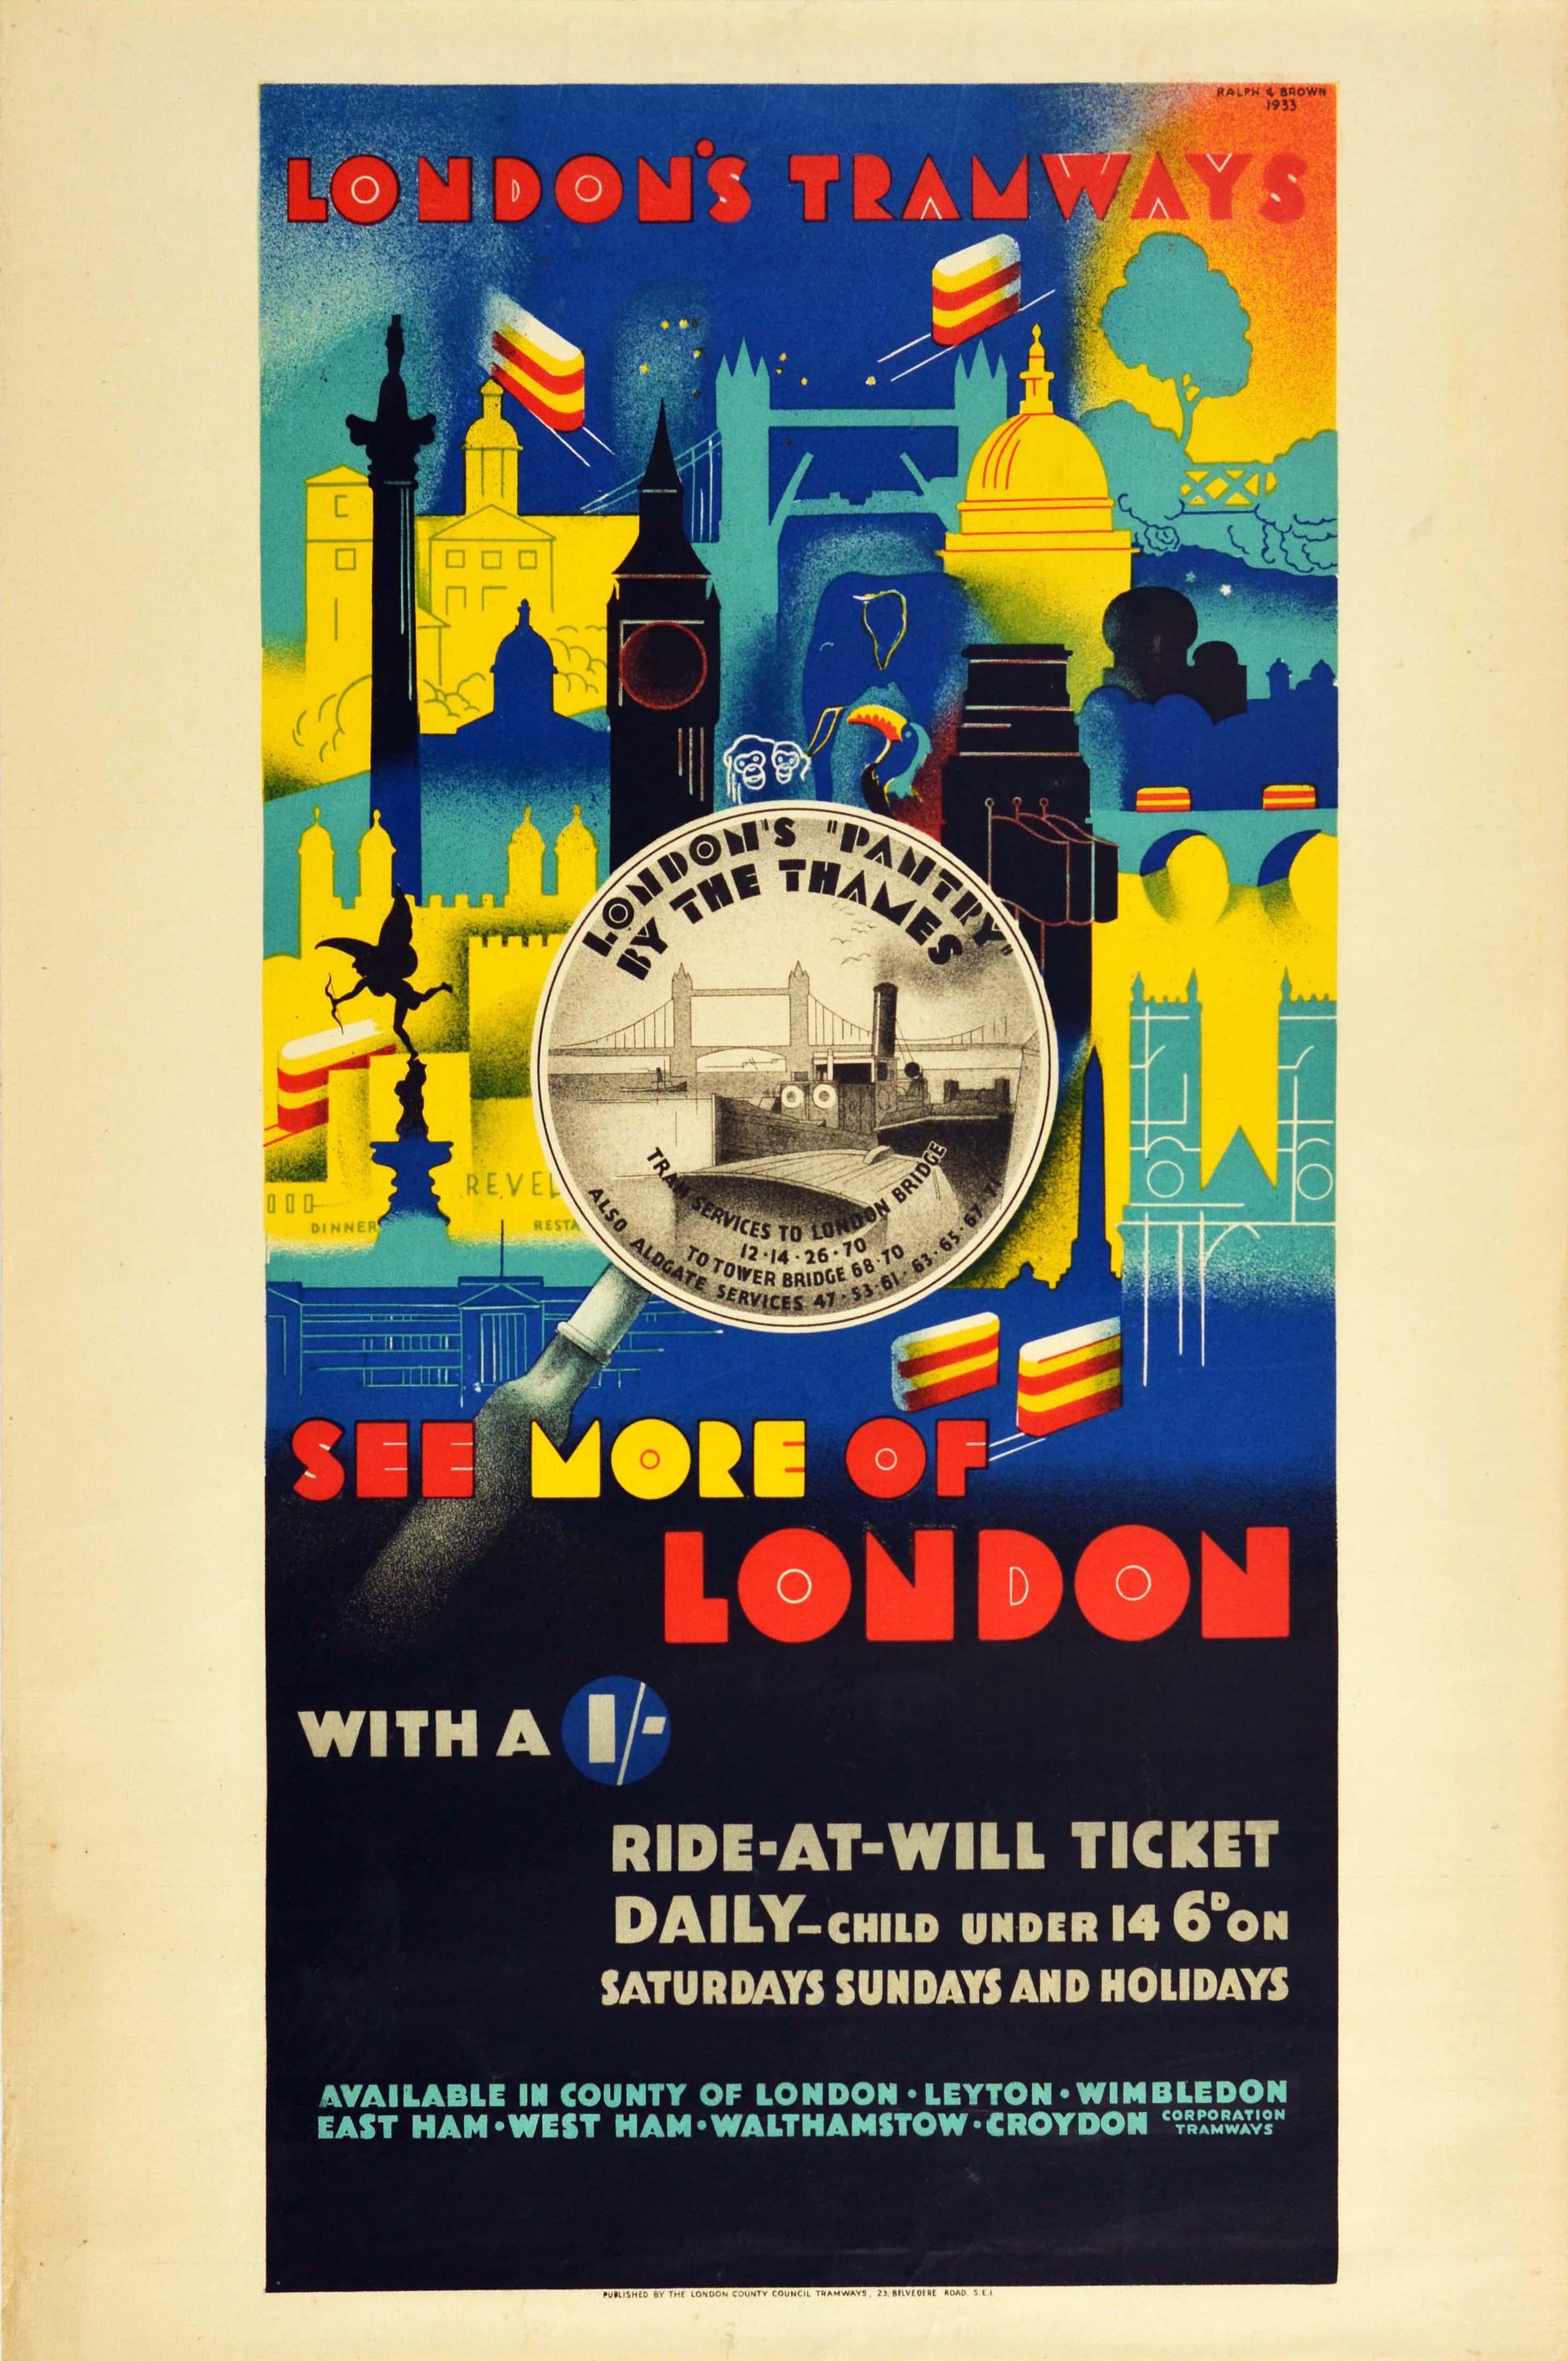 P Irwin Brown Rickman Ralph Print - Original Vintage Travel Poster London's Tramways See More Of London Transport